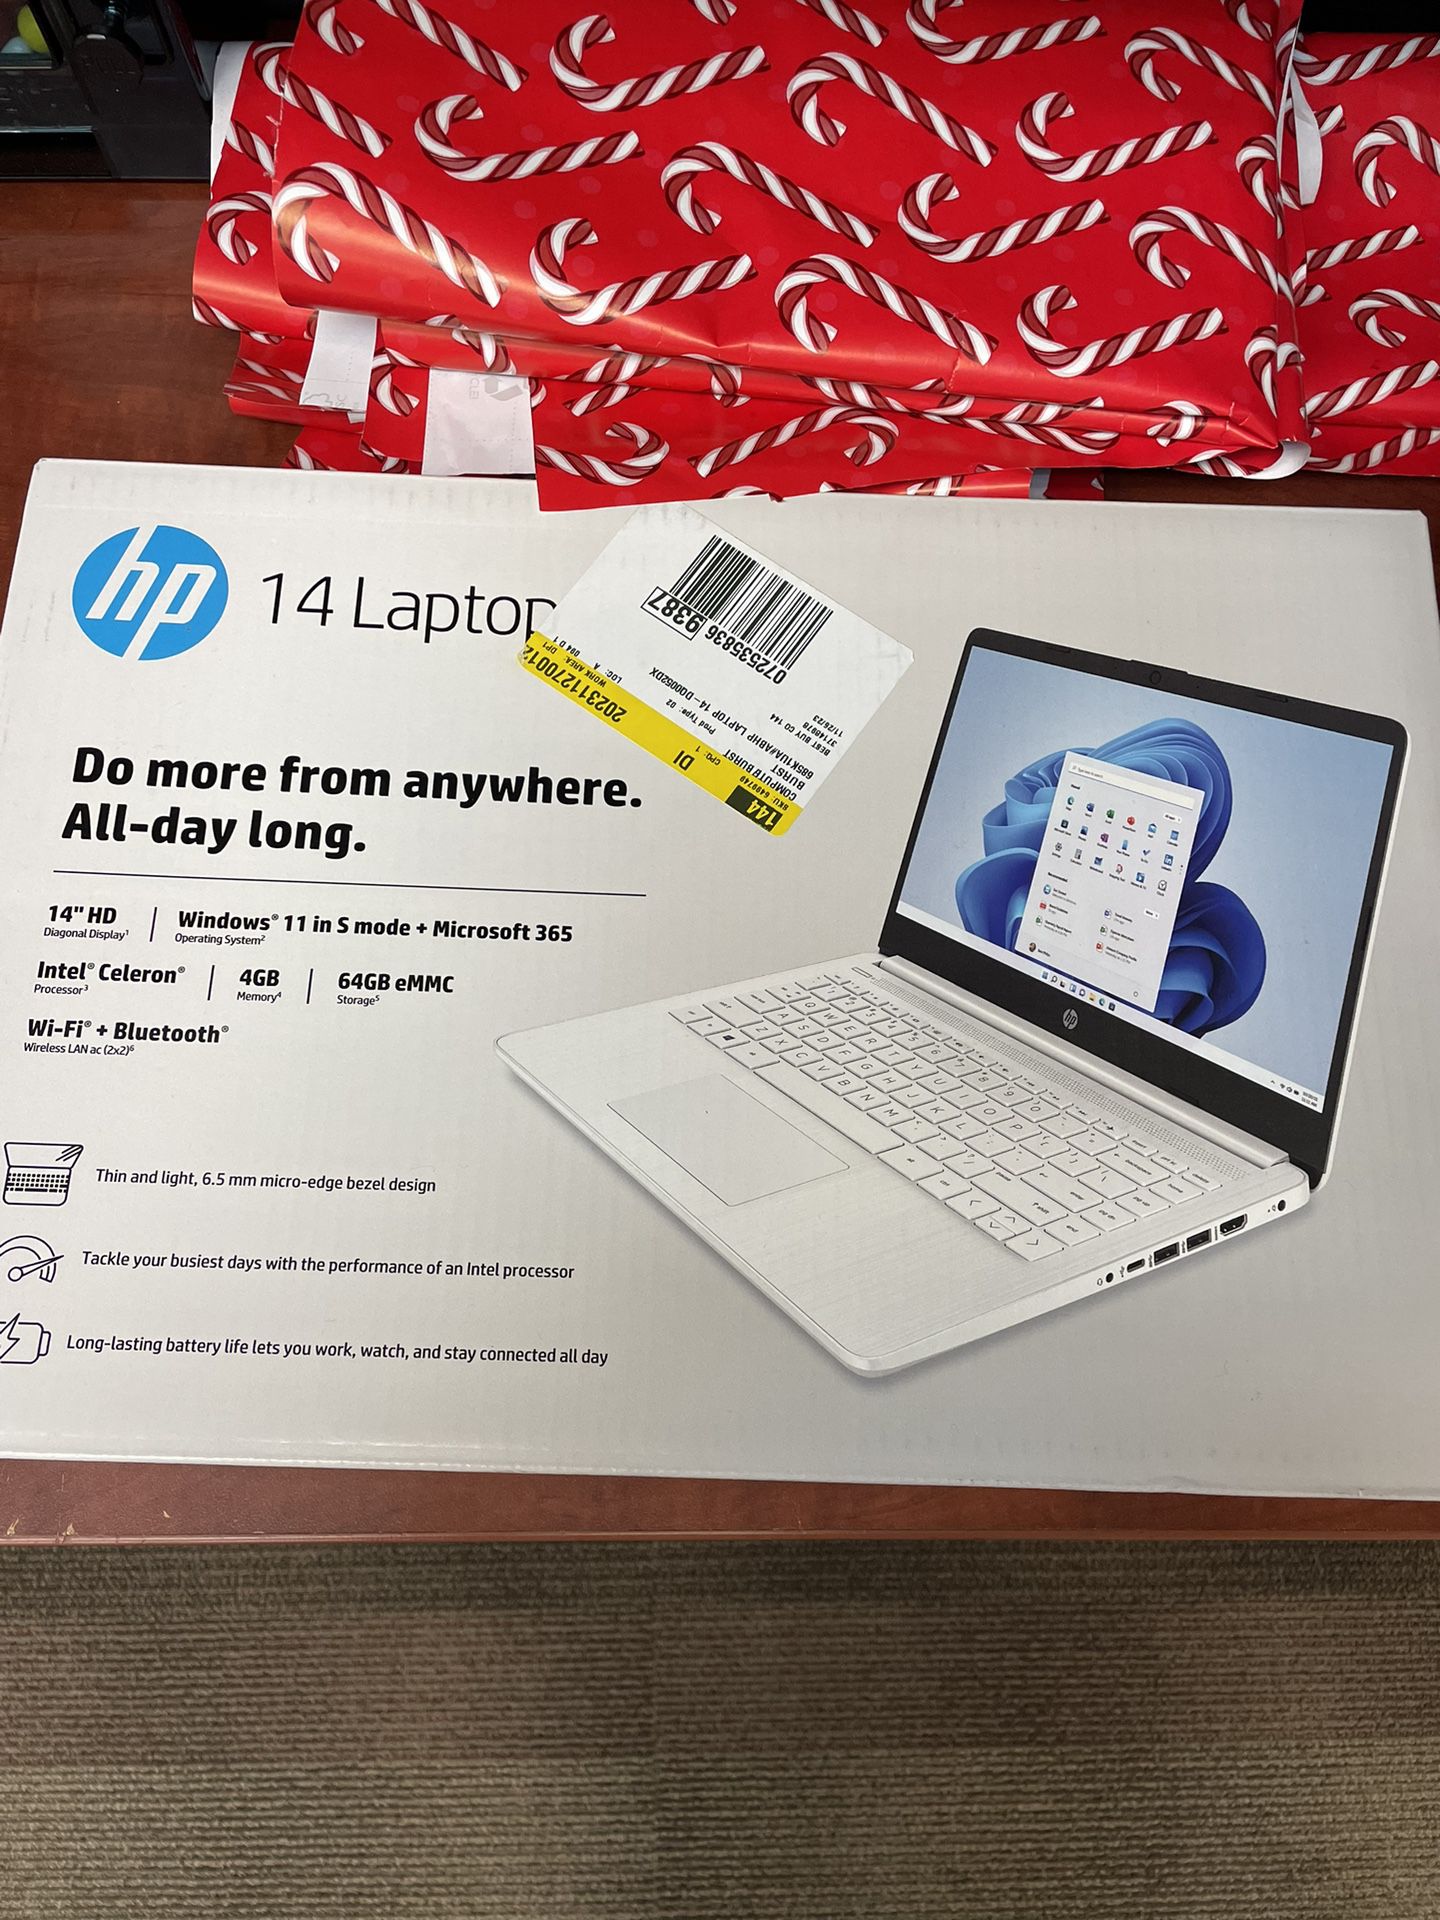 Brand New Laptop HP In Box 220$